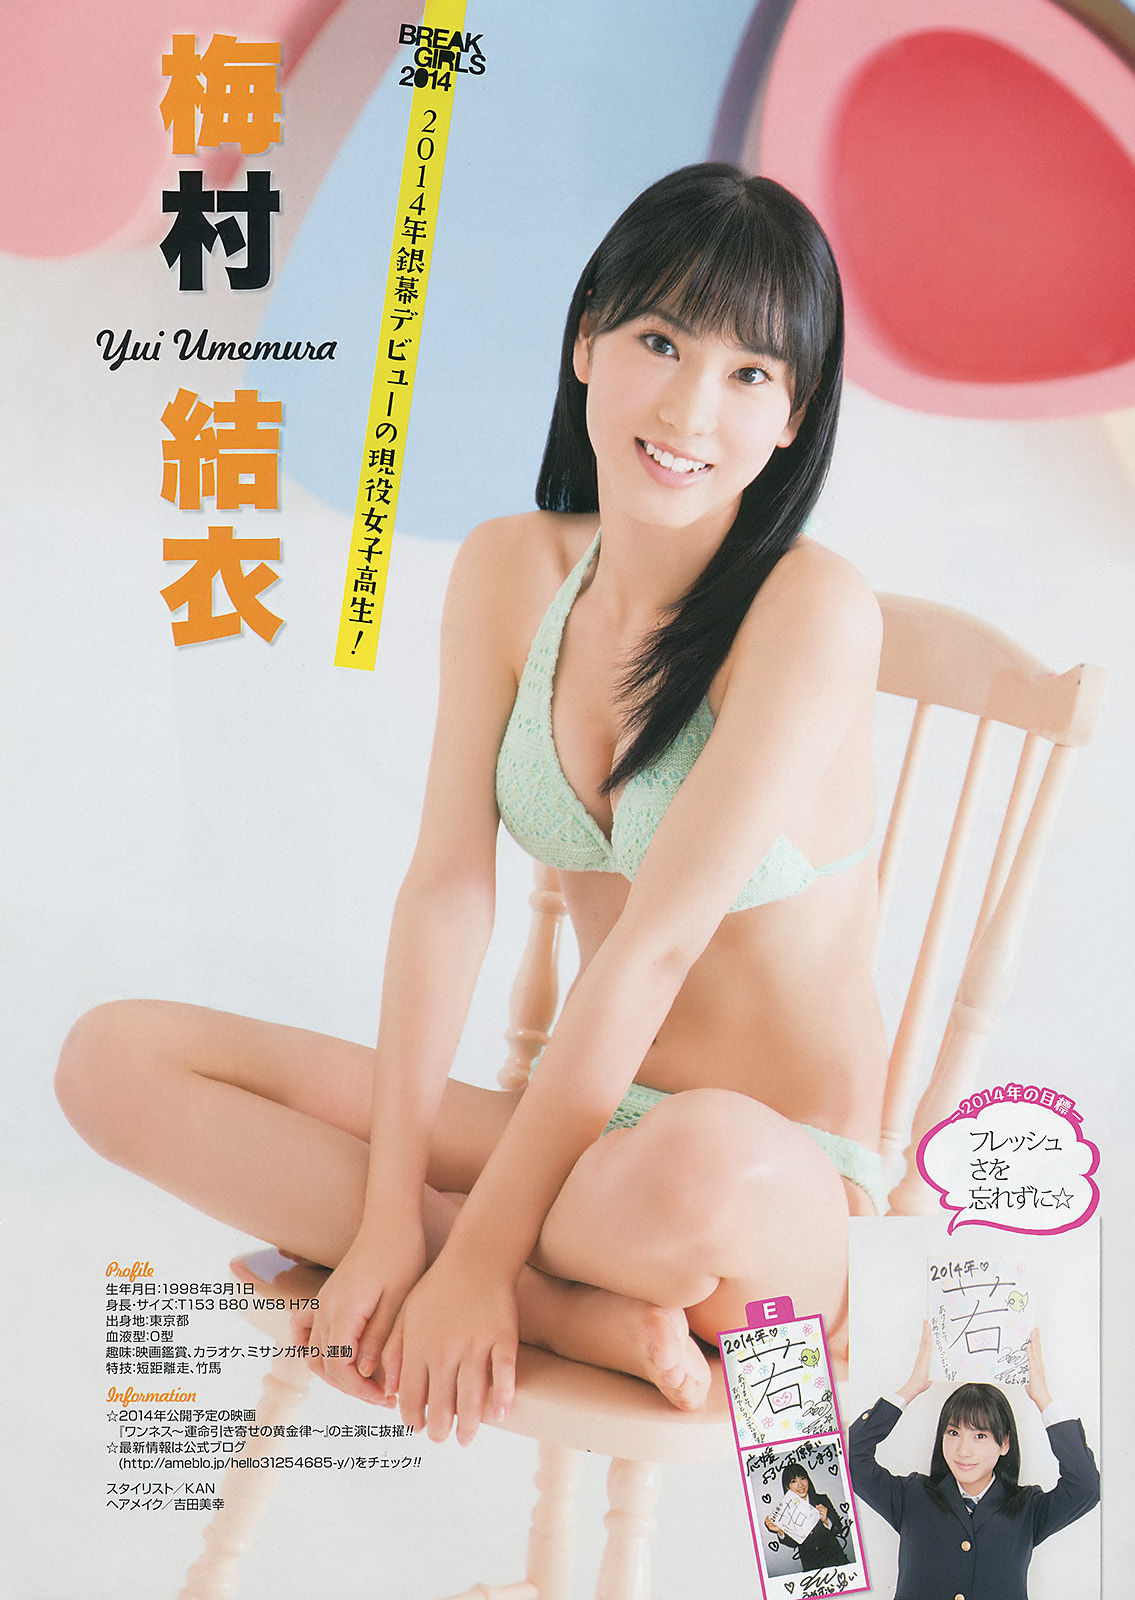 [Young Gangan] Mari Yamachi Ayaka Misaki 2014 No.02 Photography Página 15 No.51dfbd